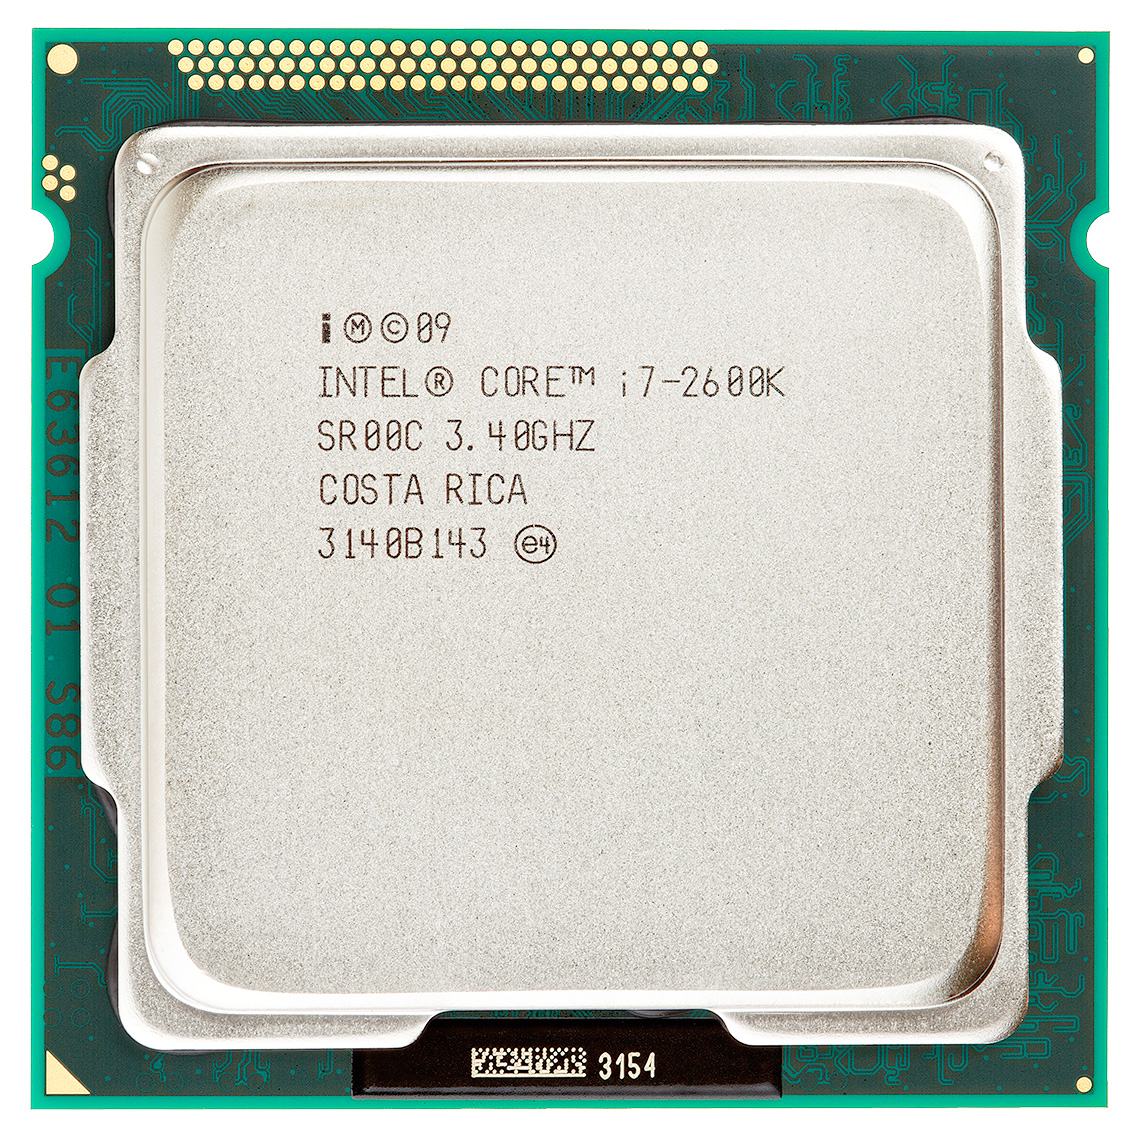 ../../_images/Intel_CPU_Core_i7_2600K_Sandy_Bridge_top.jpg